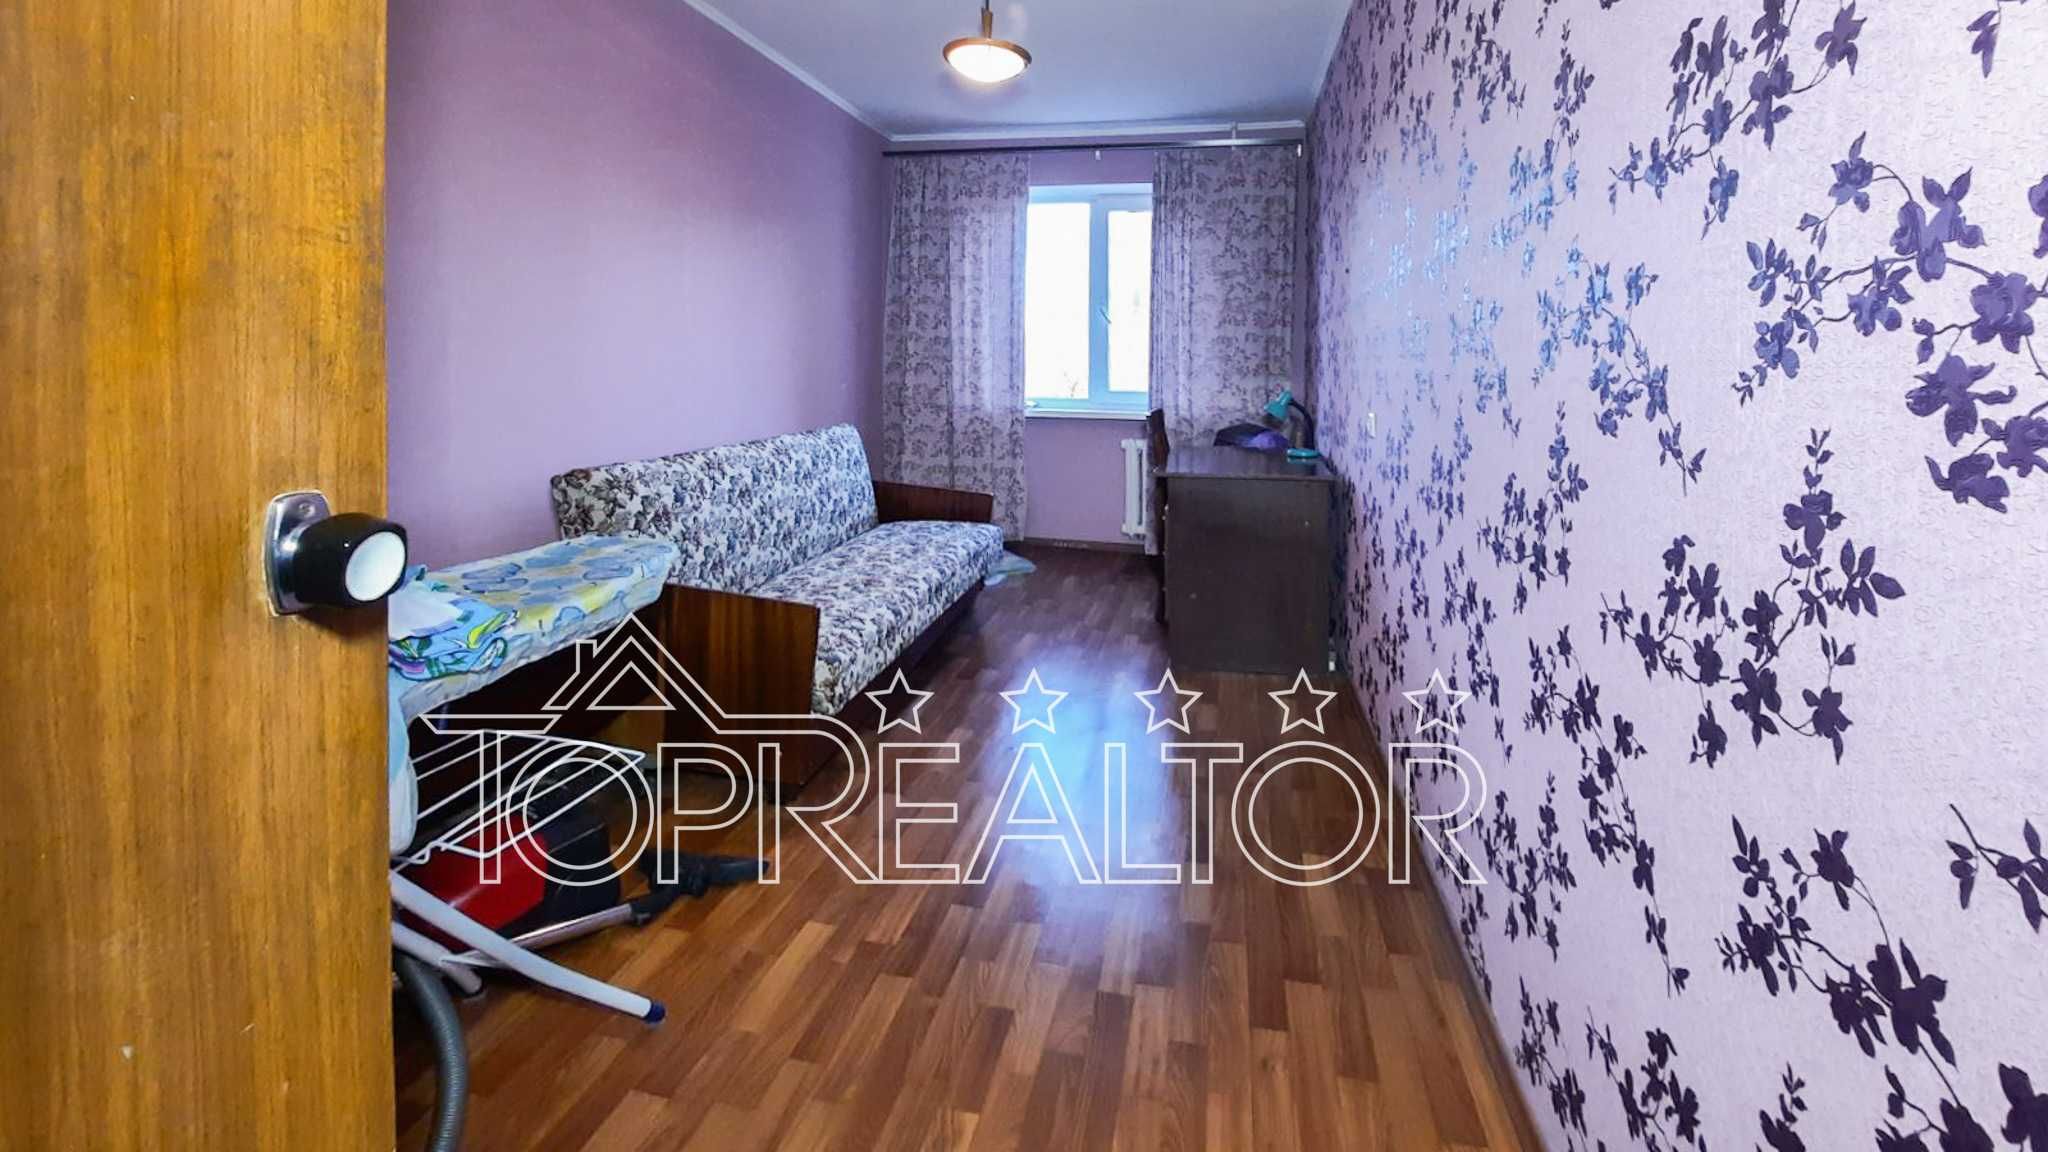 Продам 3-комнатную квартиру на улице Байрона 161 (Героев Сталинграда)